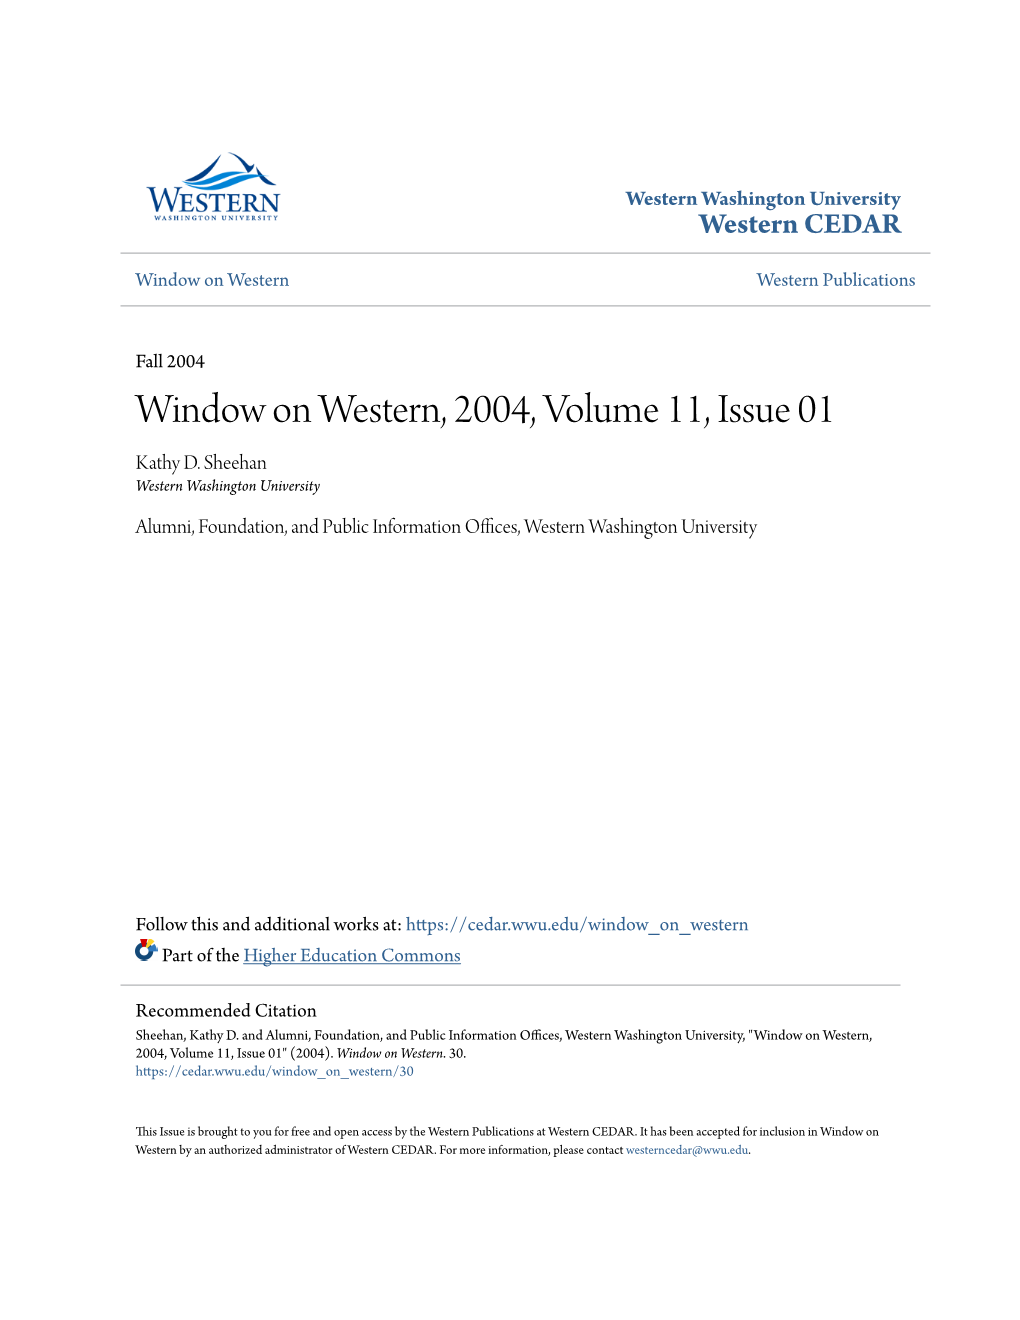 Window on Western, 2004, Volume 11, Issue 01 Kathy D